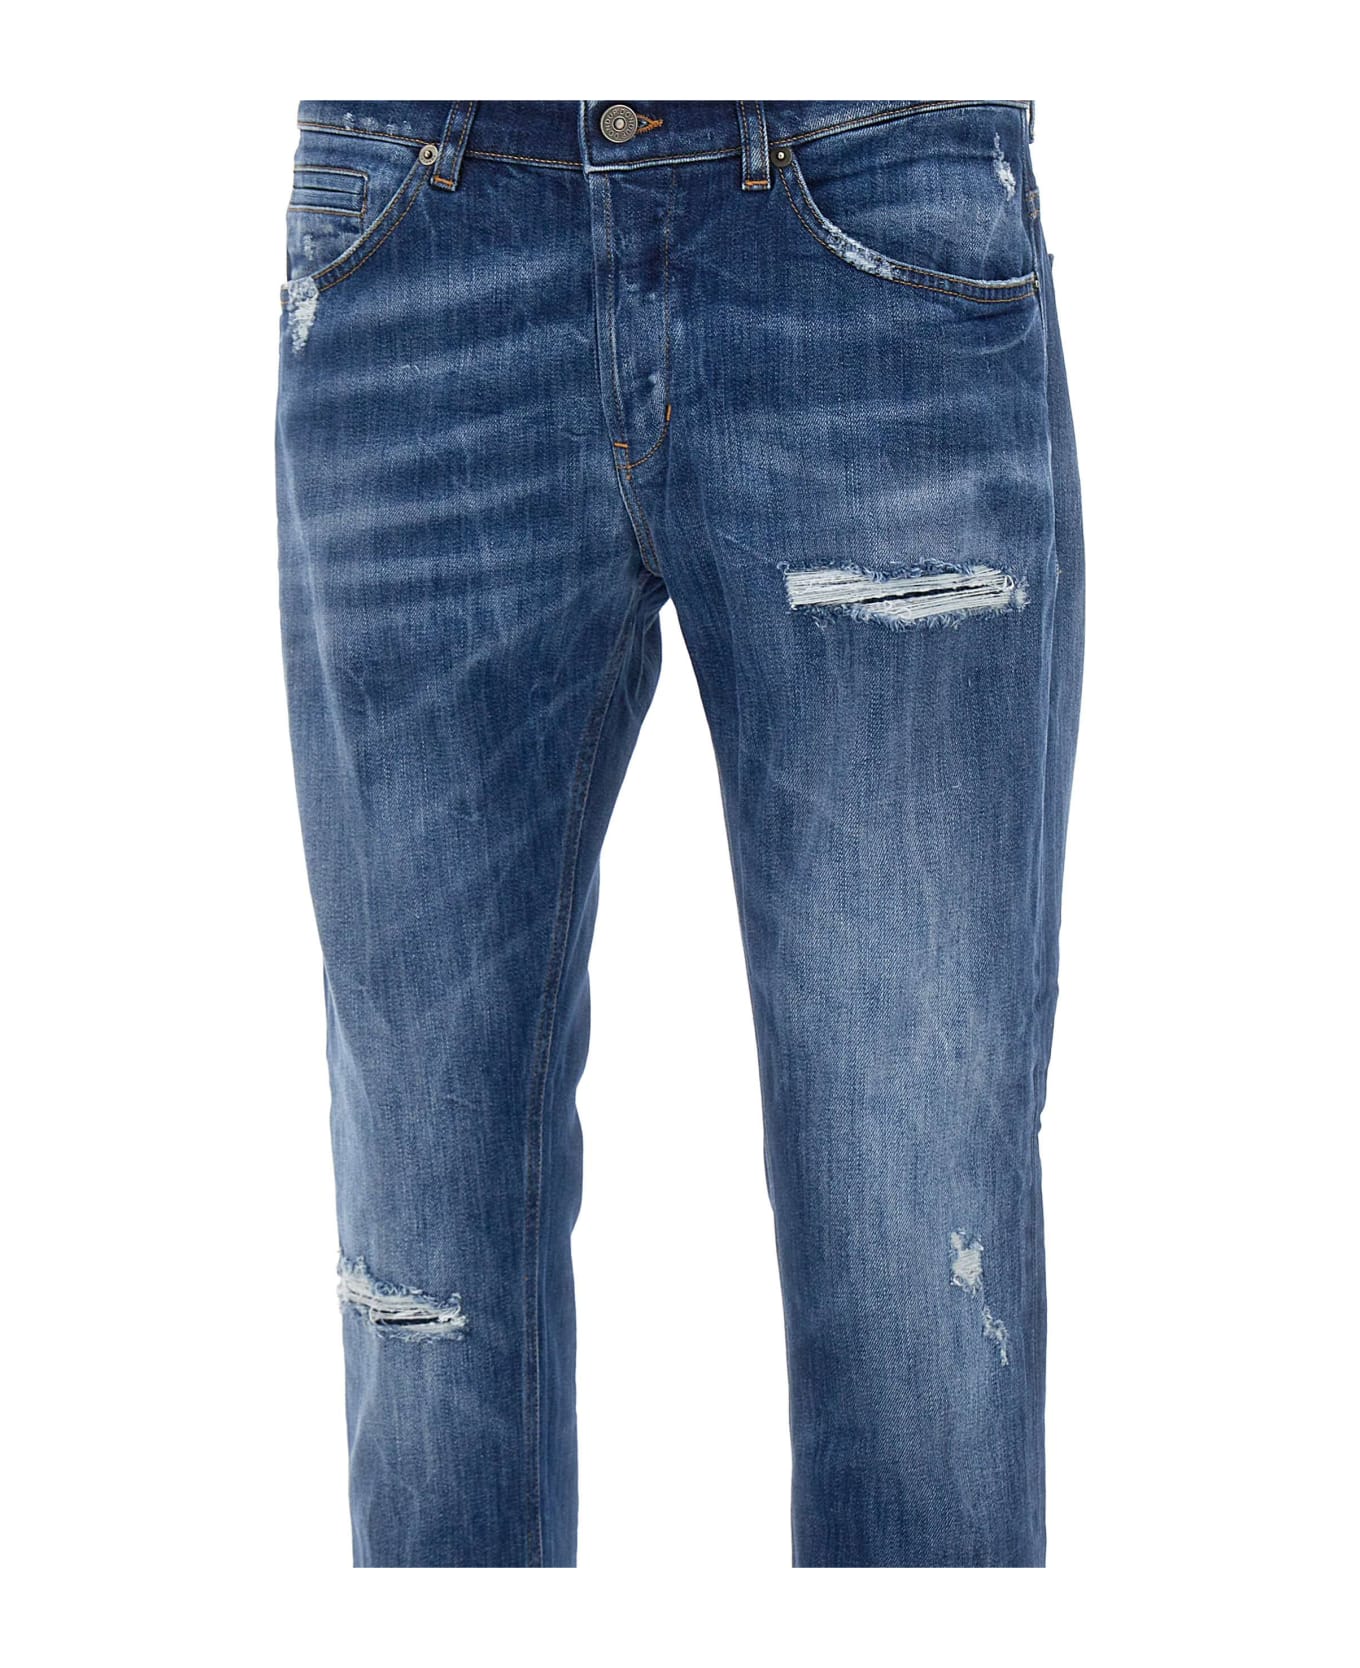 Dondup 'george' Jeans - BLUE デニム